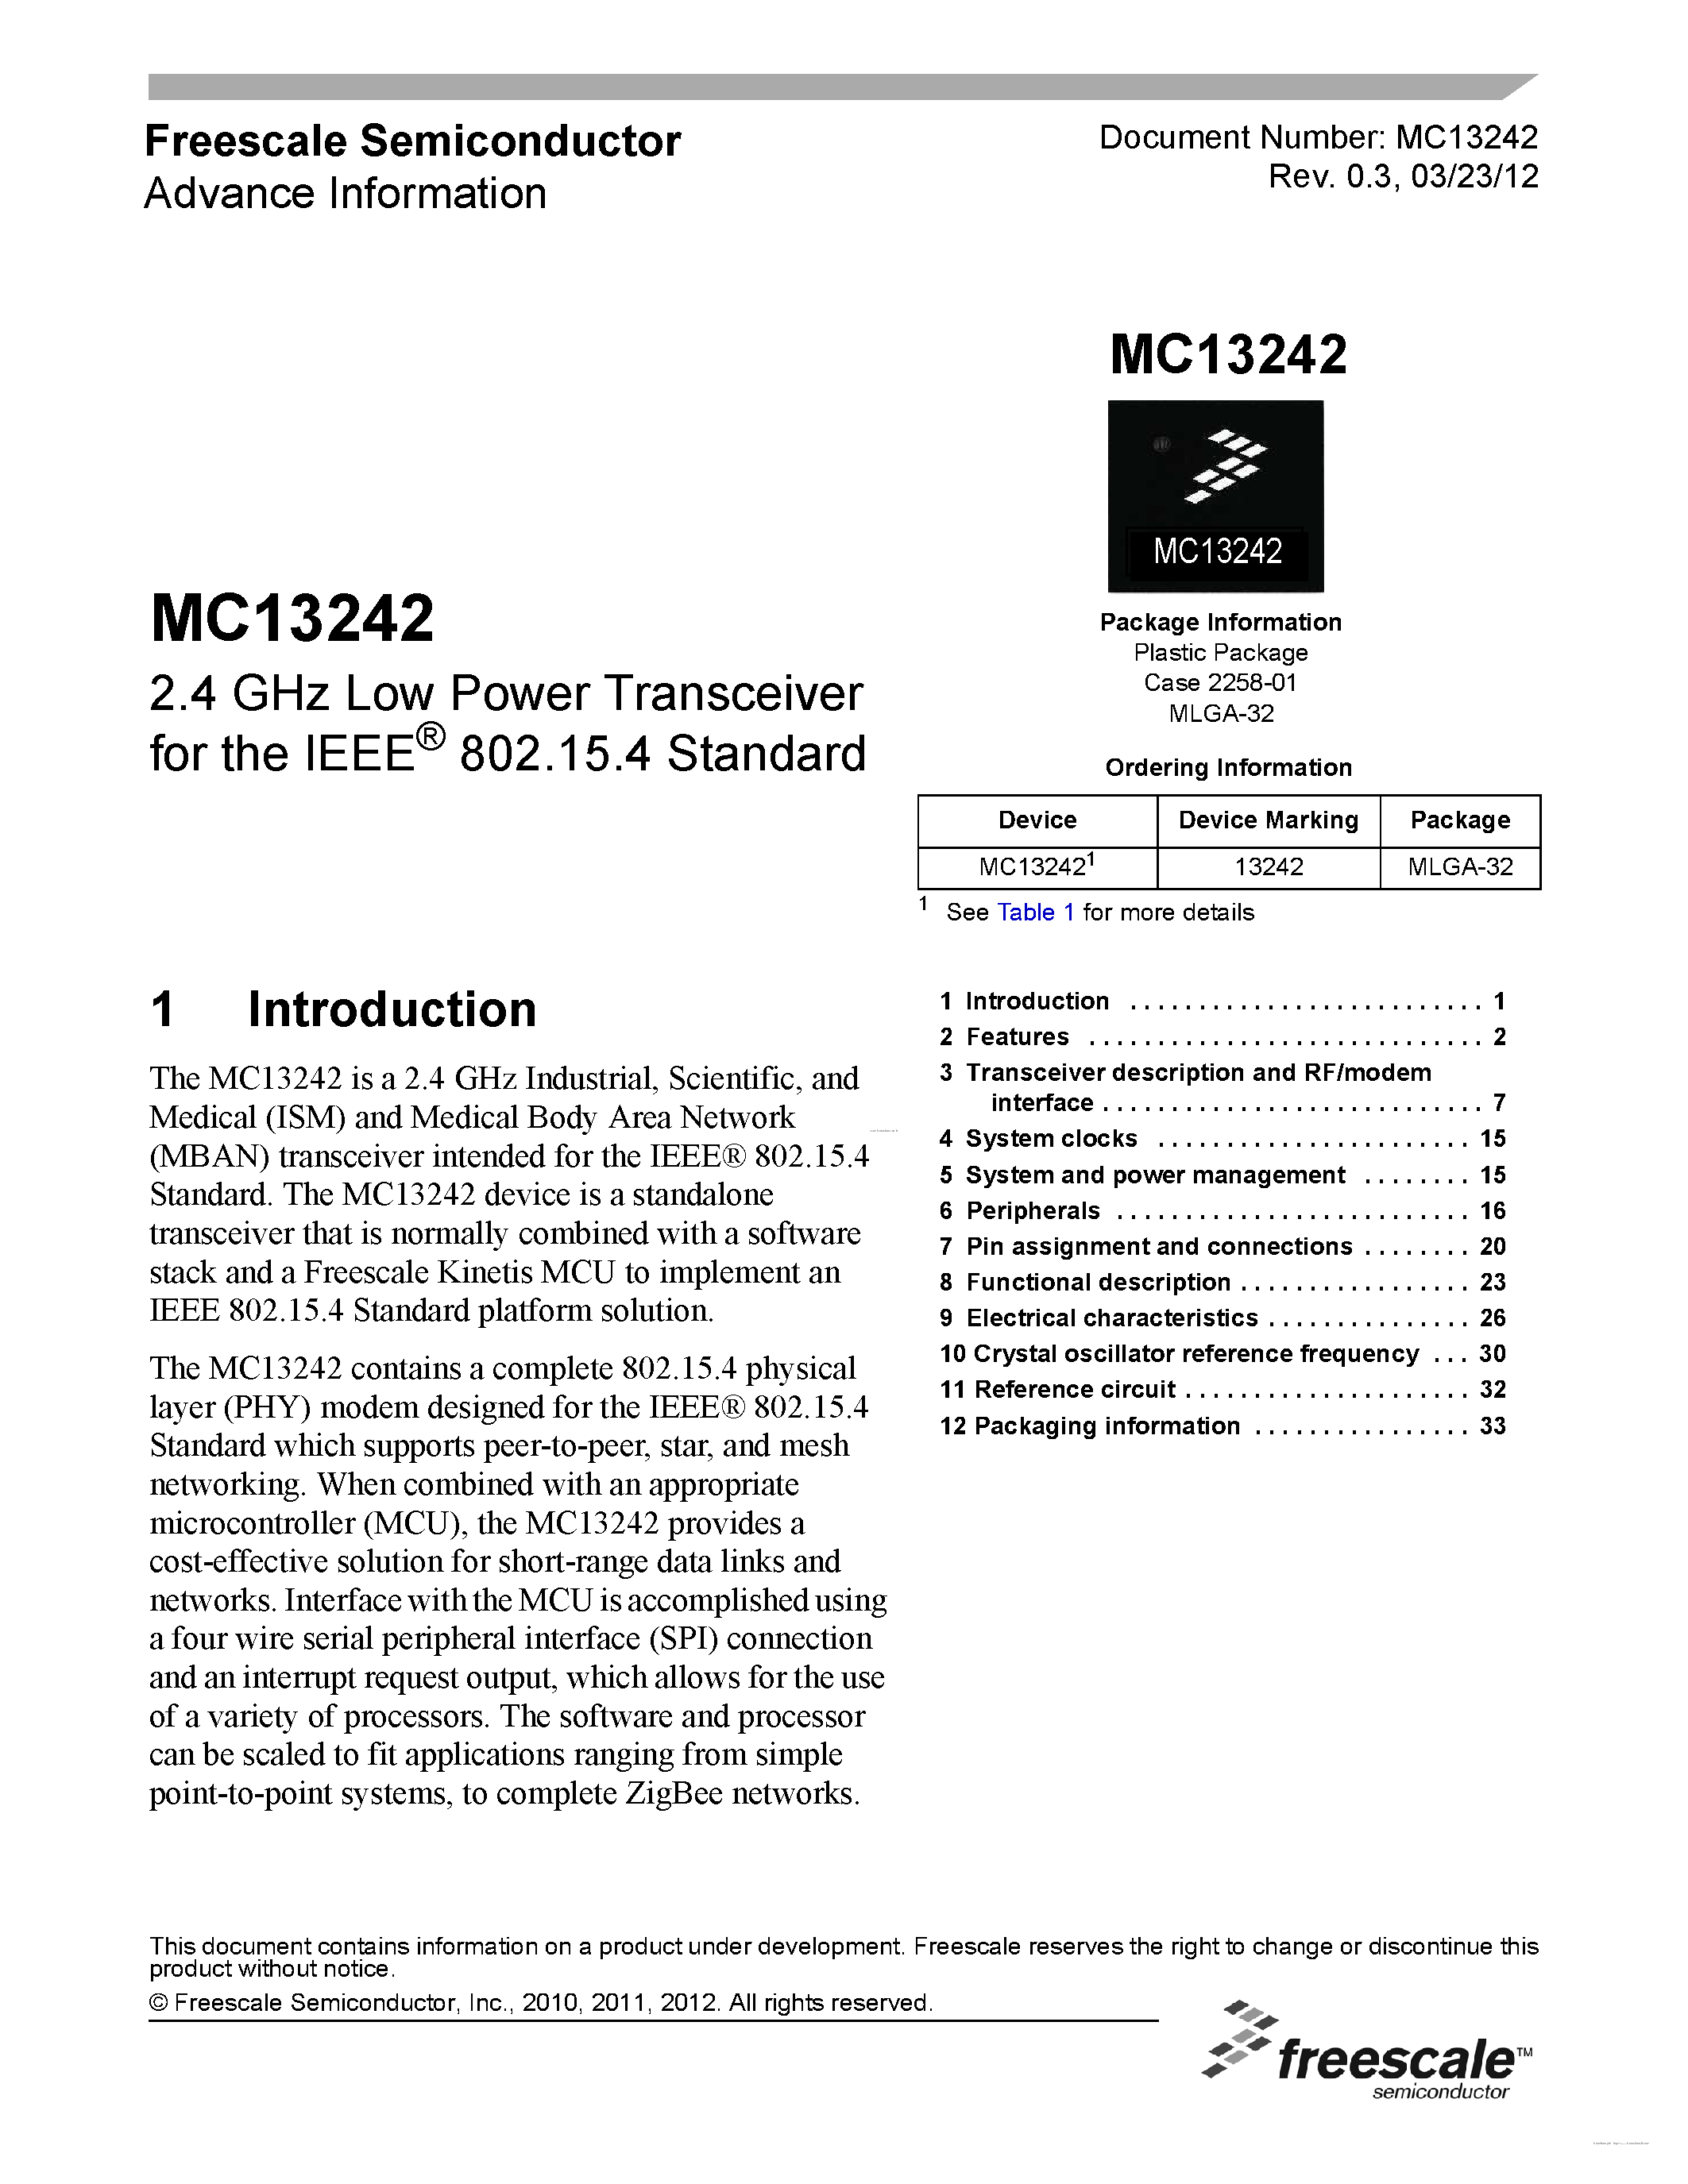 Даташит MC13242 - 2.4 GHz Low Power Transceiver страница 1